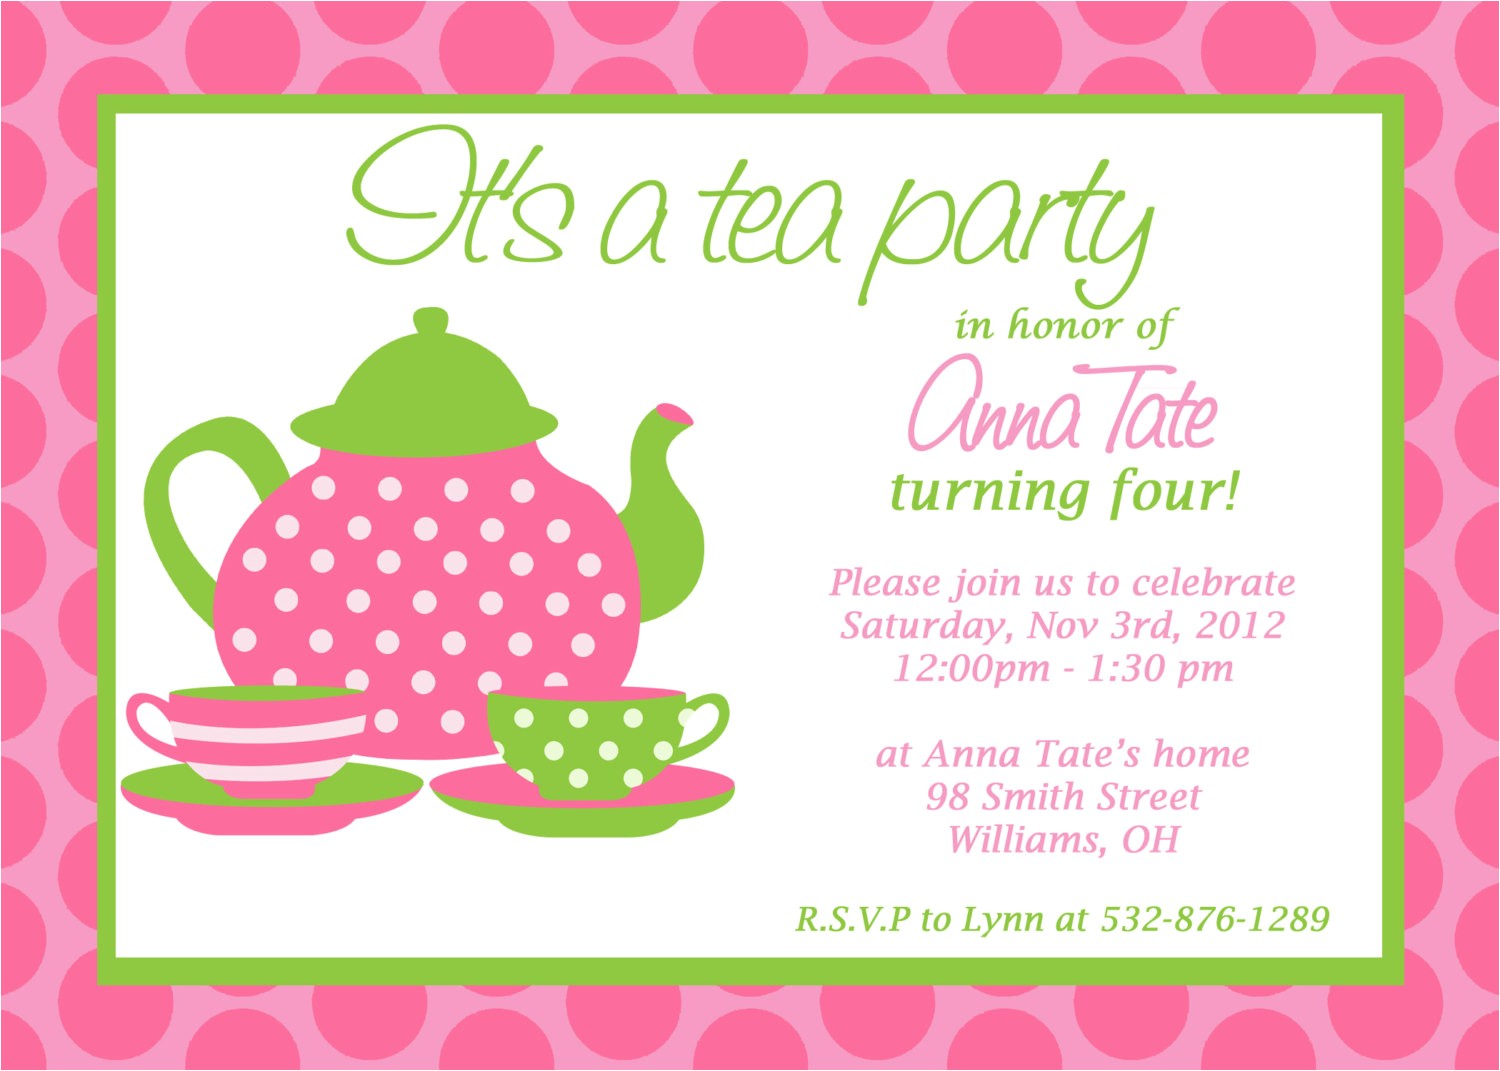 Formal Tea Party Invitation Wording Party Invitations Great Design Tea Party Invitation